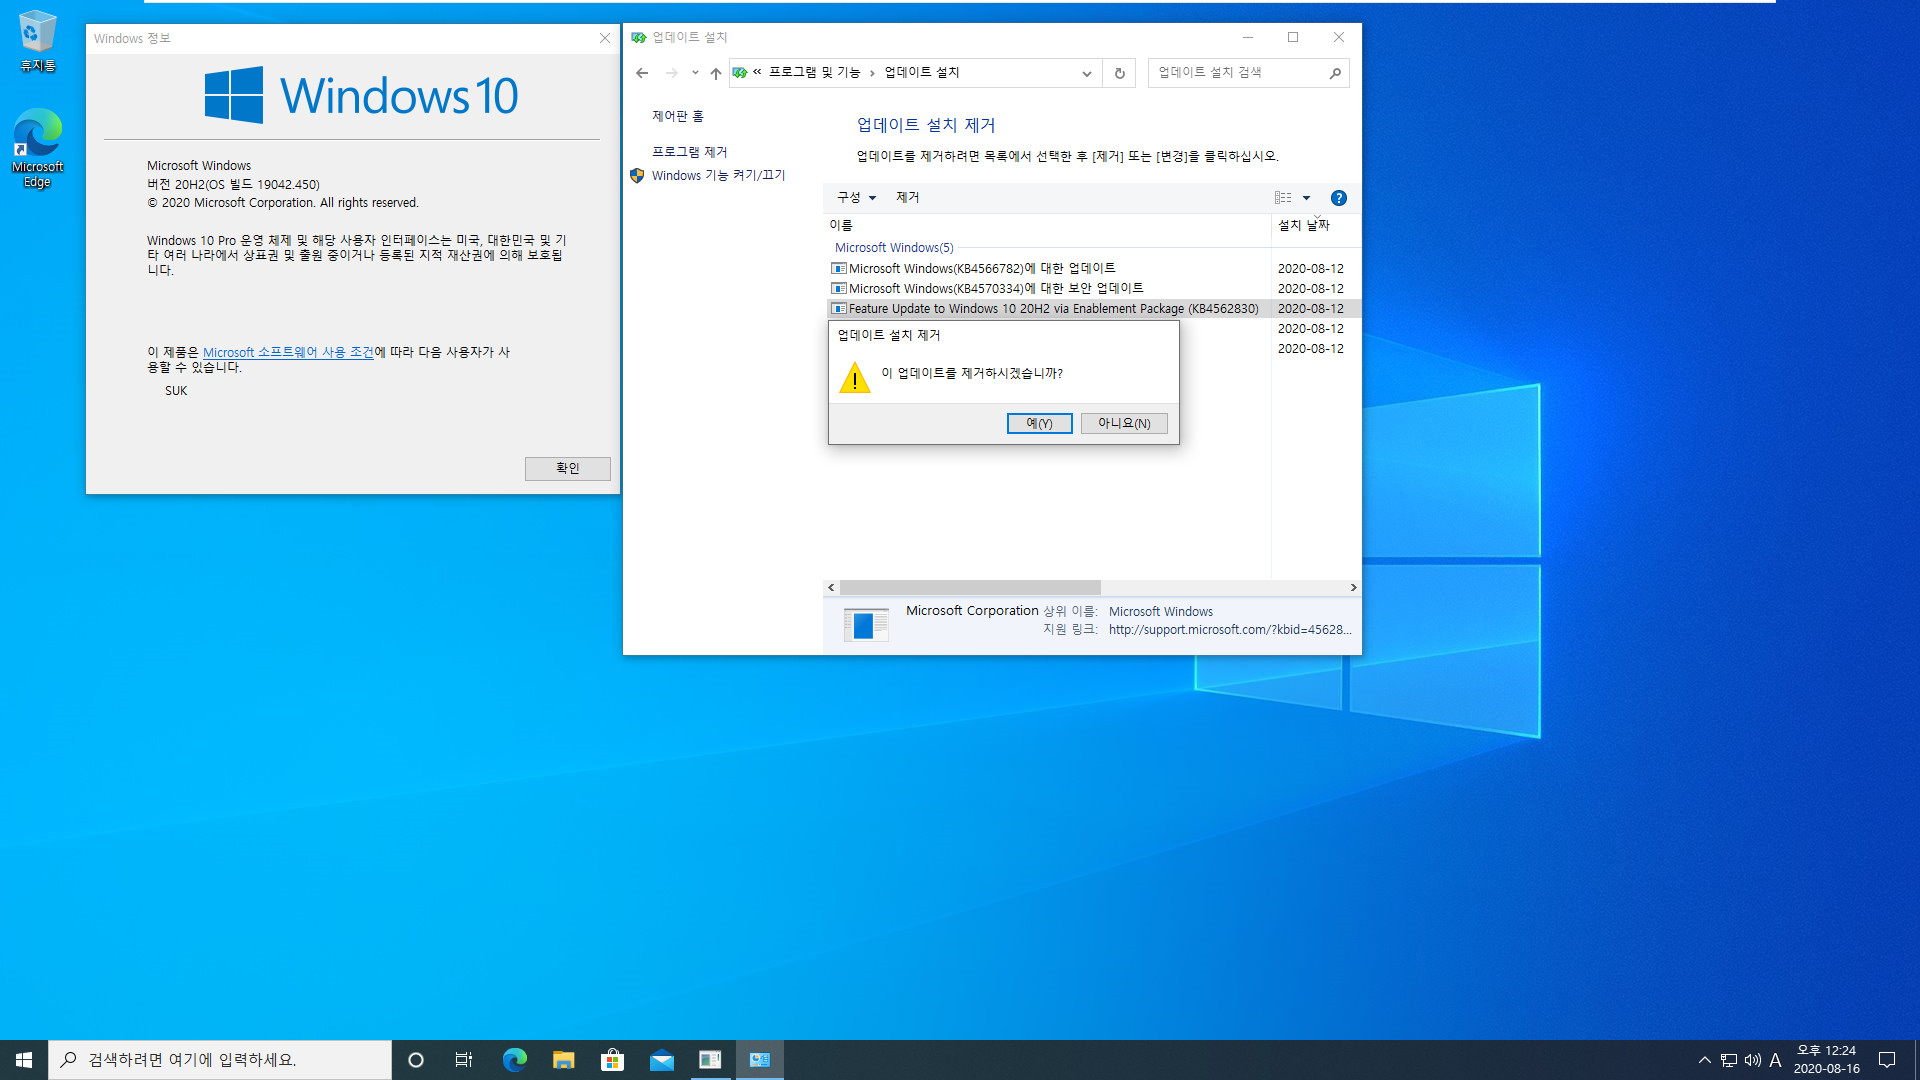 Windows 10 버전 20H2 (OS 빌드 19042.421) 베타 채널부터 새로운 시작 메뉴와 함께 시스템 속성이 설정의 정보로 뜹니다 - 20H2 기능 업데이트 KB4562830 제거하면 버전 2004가 되면서 이전의 시스템이 열립니다. 새로운 시작 메뉴도 적용되지 않습니다 2020-08-16_122403.jpg